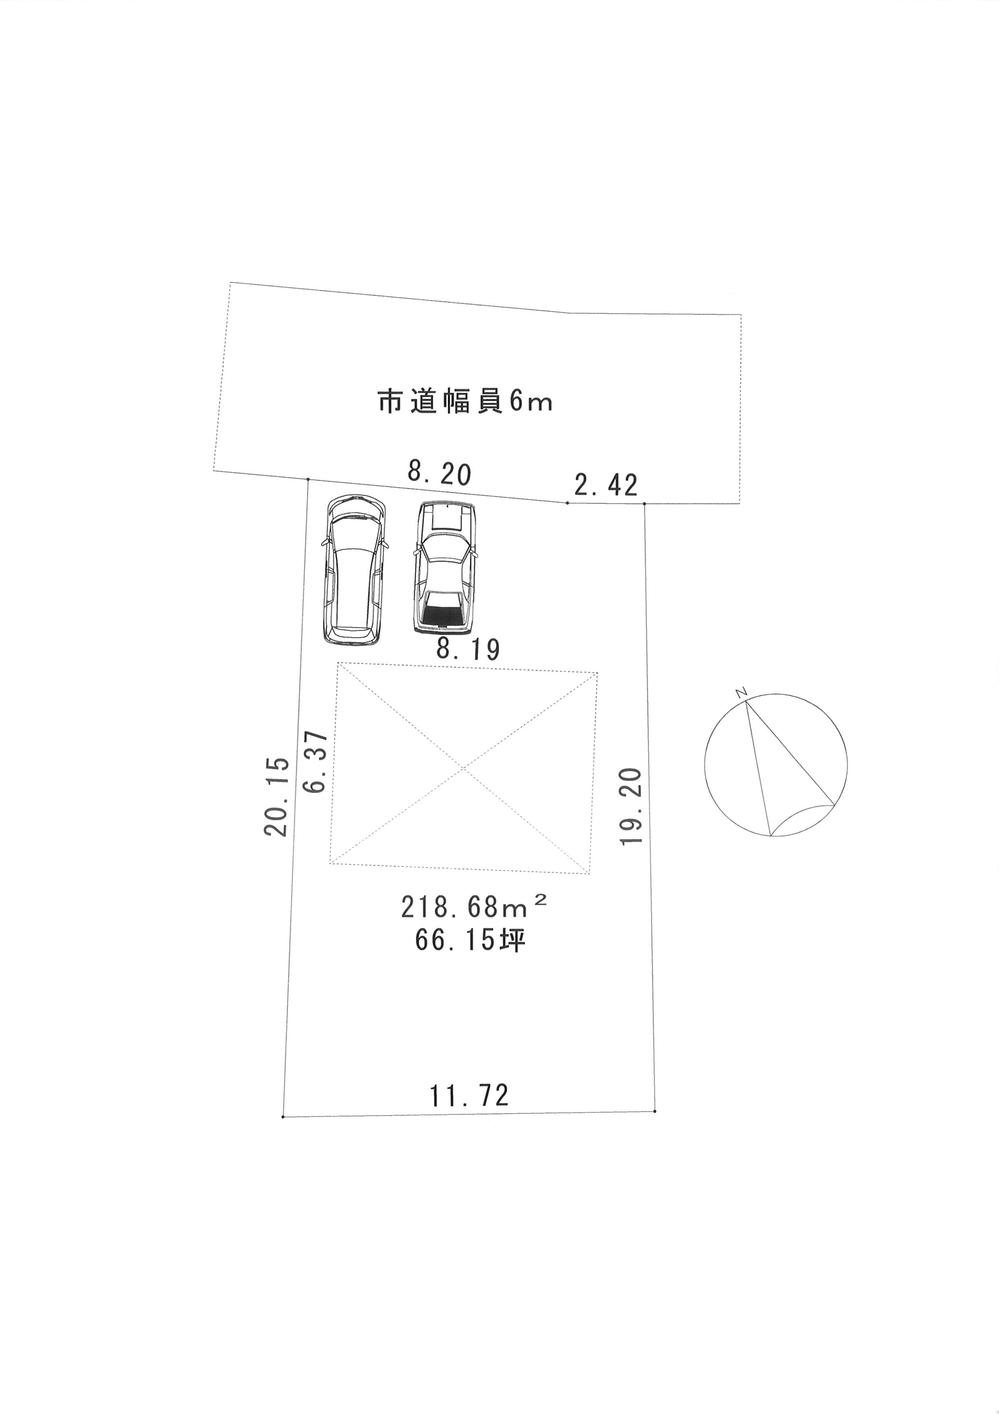 Compartment figure. Land price 13.5 million yen, Land area 218.68 sq m